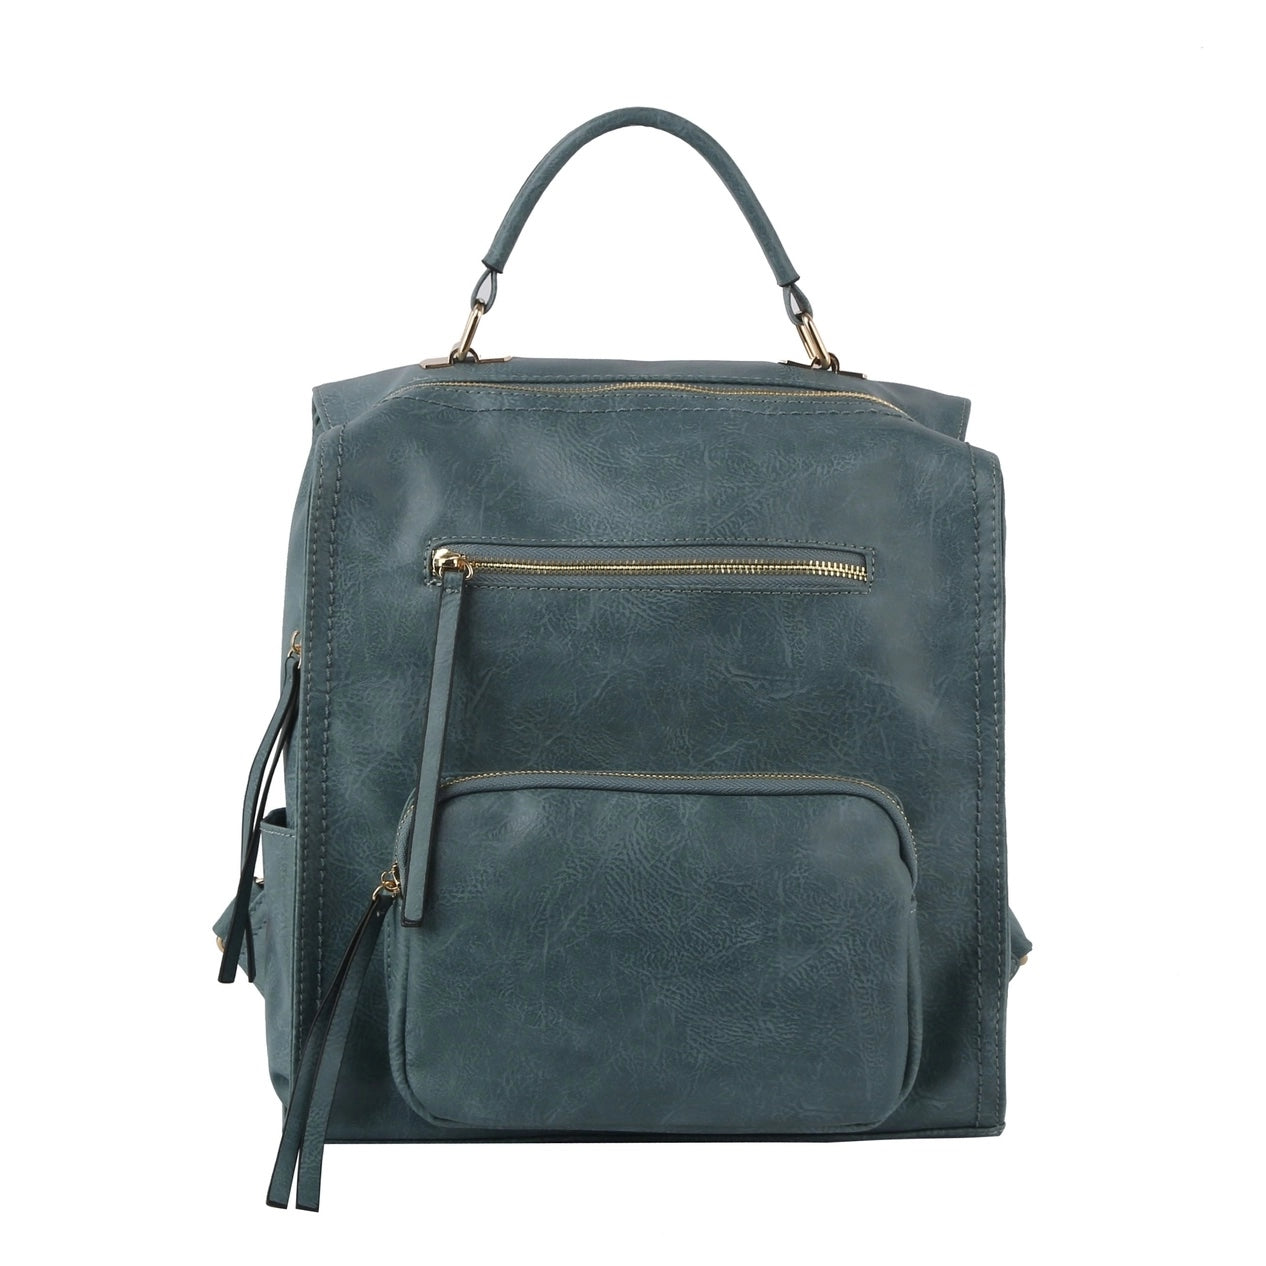 Handbag Factory Corp Backpack Travel Purse - Multiple Colors